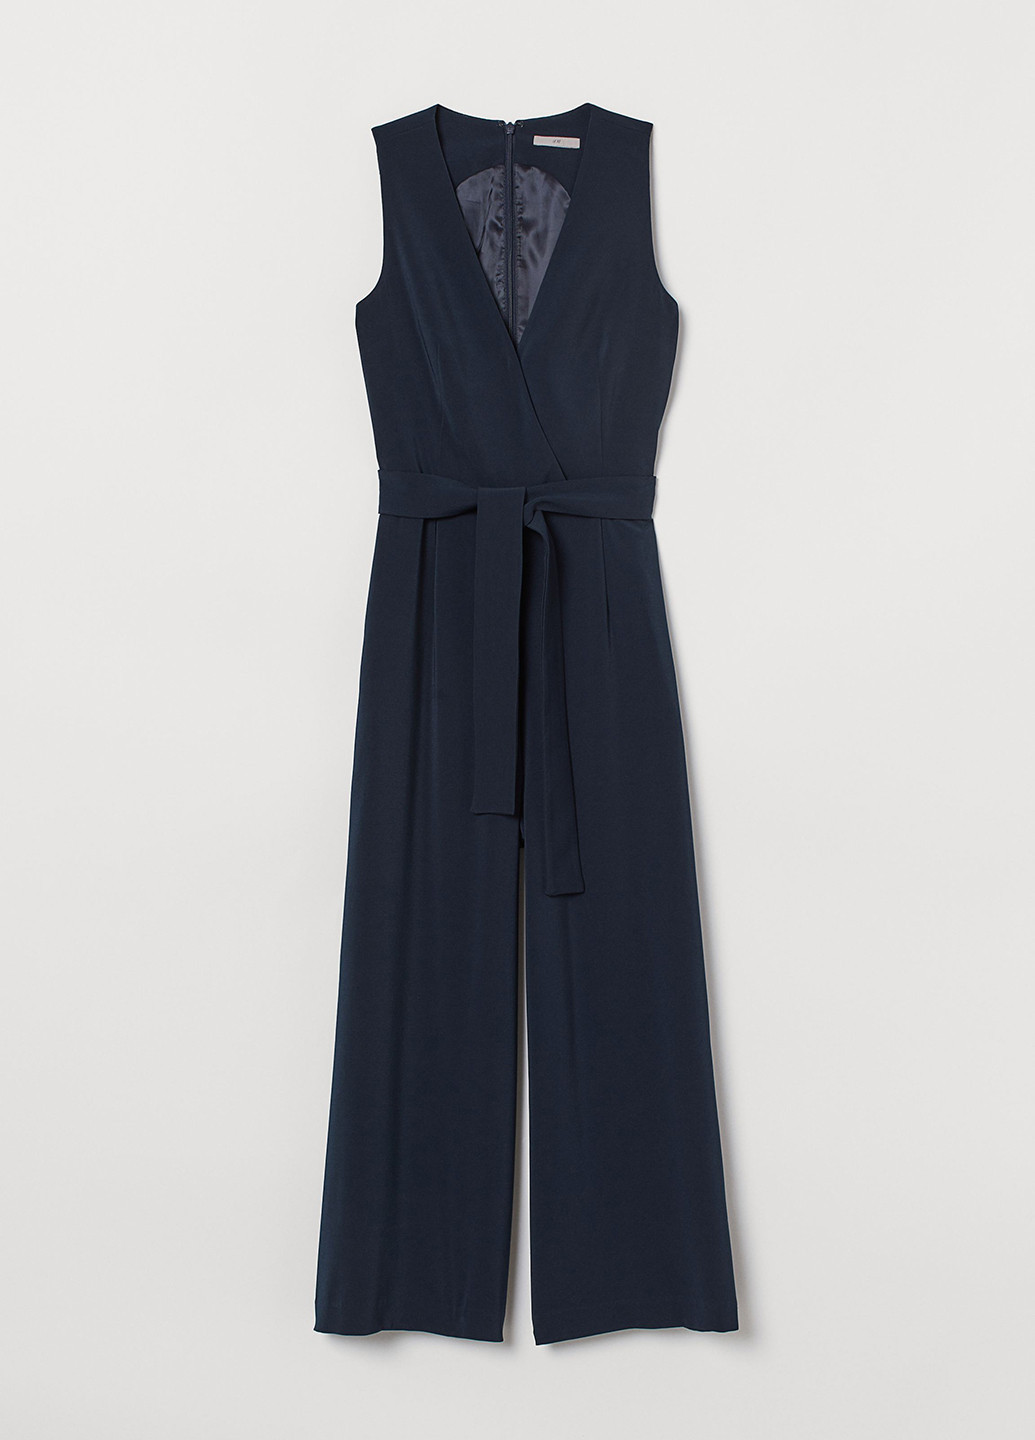 Комбинезон H&M комбинезон-брюки однотонный тёмно-синий кэжуал полиэстер